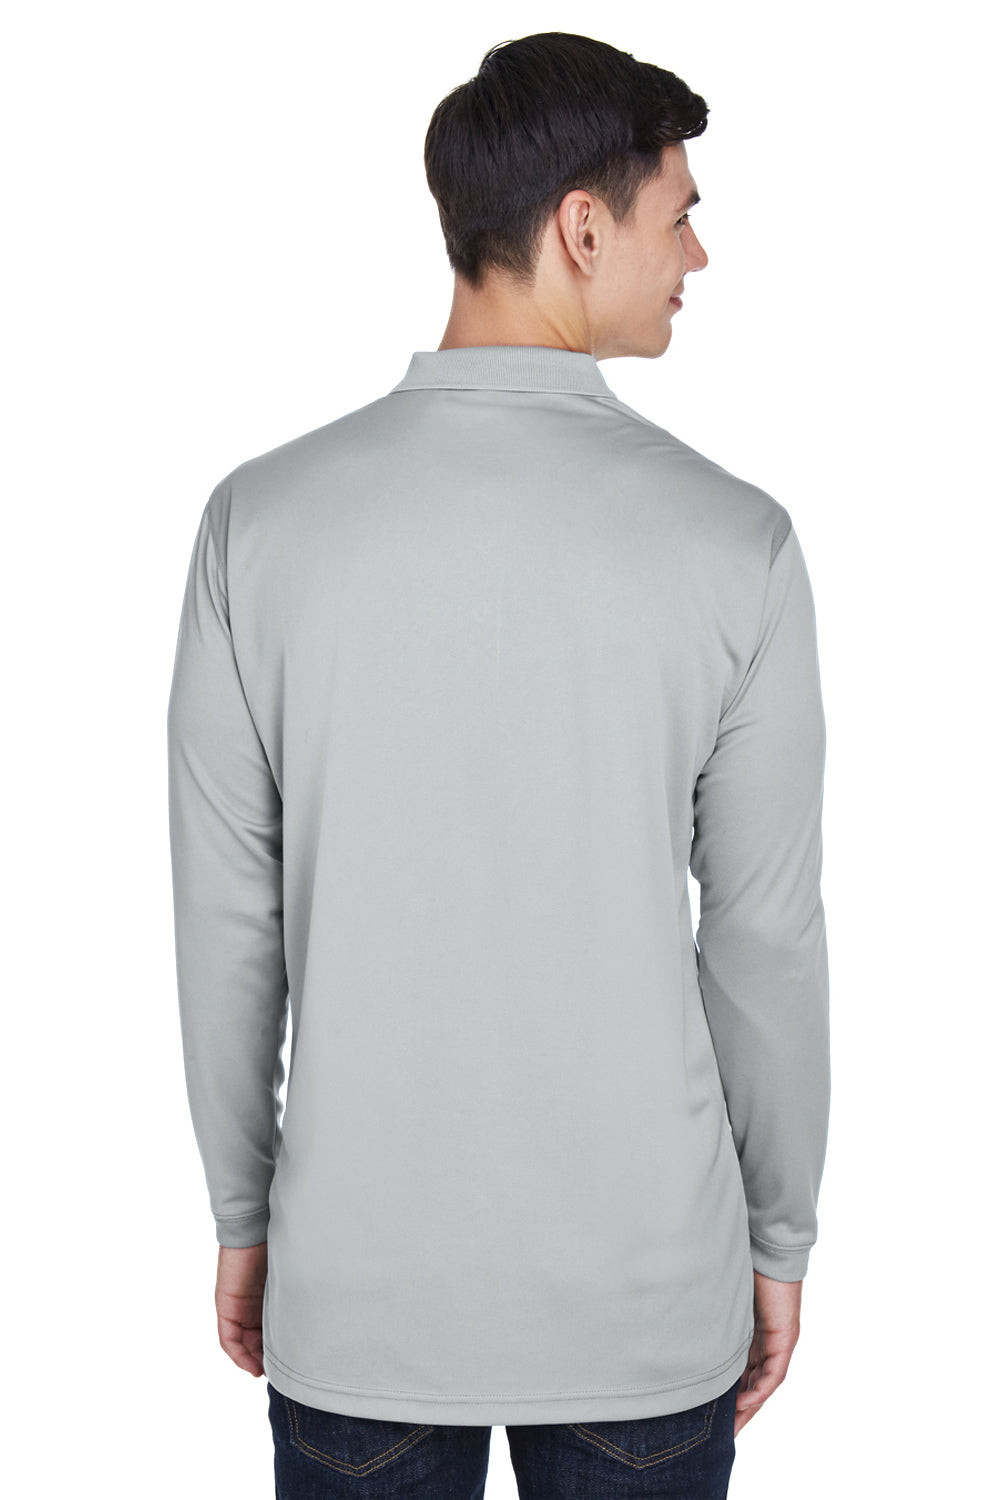 UltraClub 8405LS Mens Cool & Dry Moisture Wicking Long Sleeve Polo Shirt Grey Back